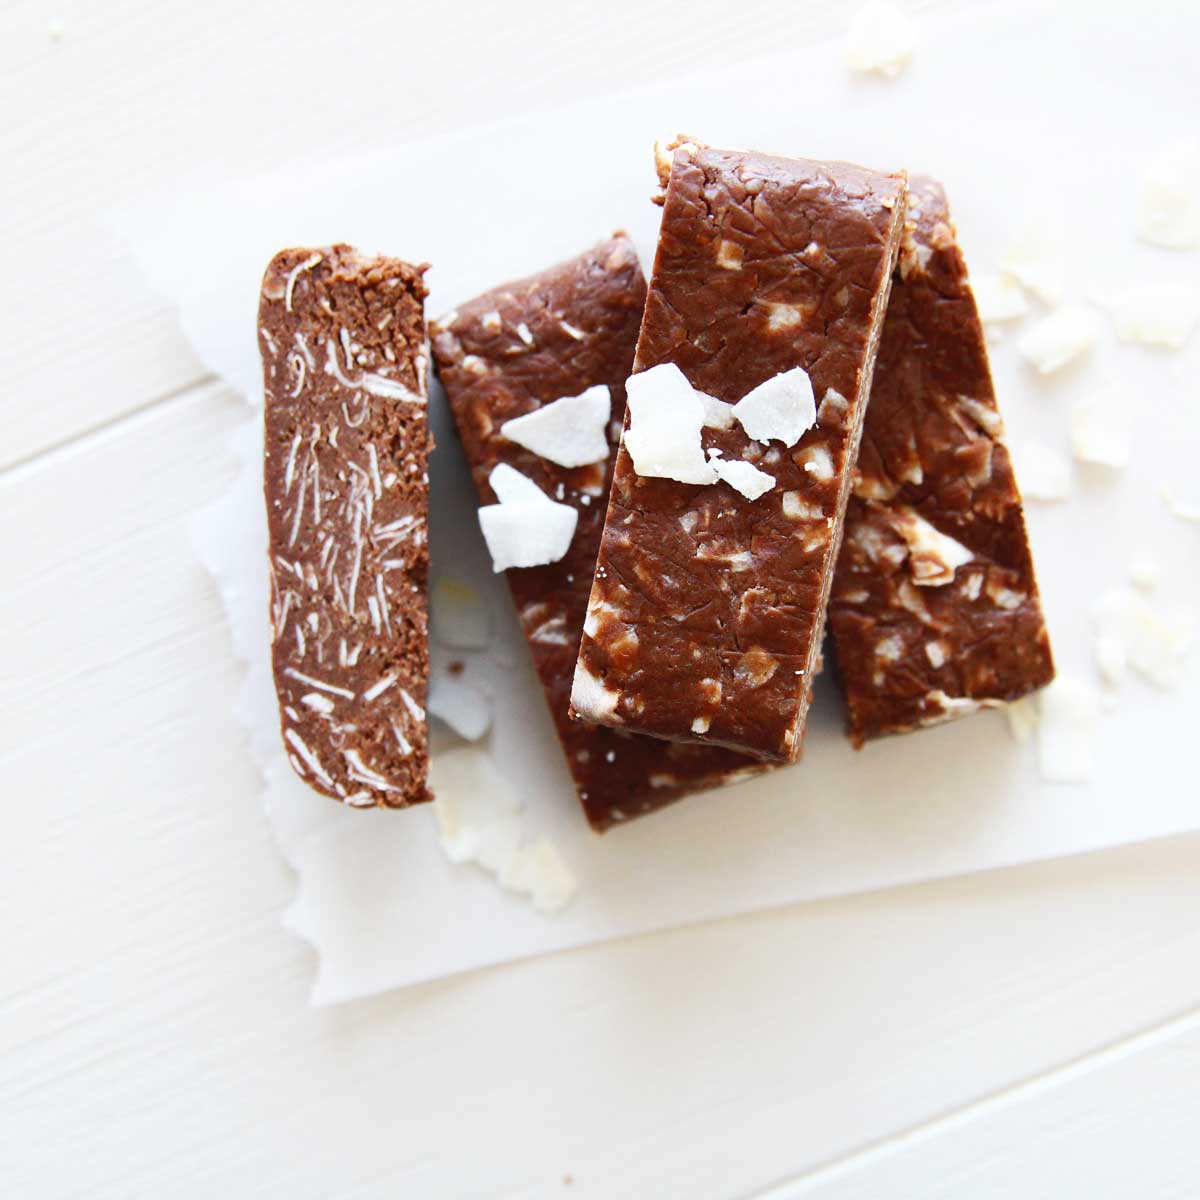 Vegan Coconut Chocolate "Almond Joy" Protein Bars Recipe - Banana Chocolate Mochi